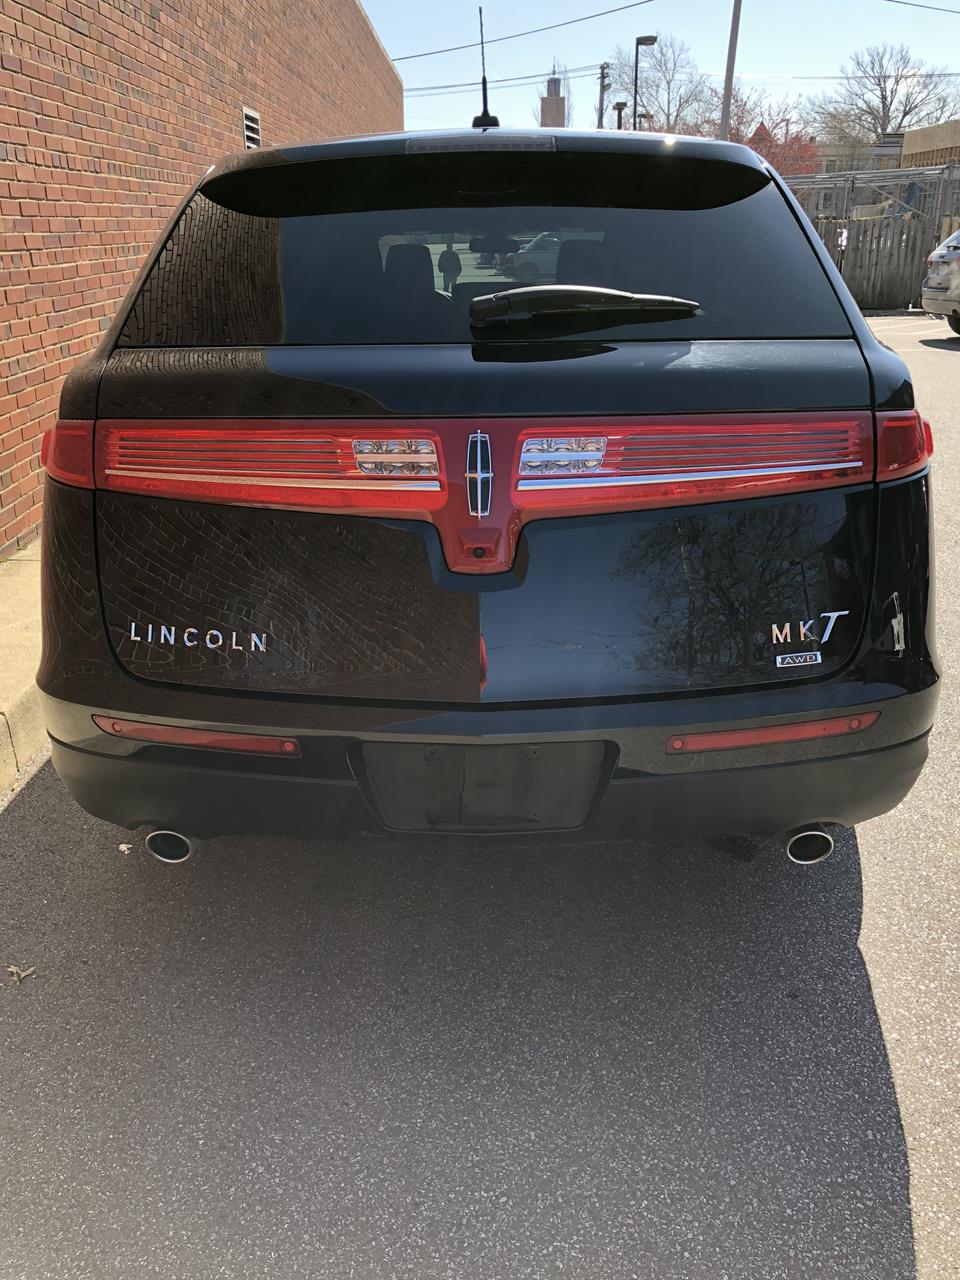 2014 Lincoln Eagle 6 Door Limousine 99 5